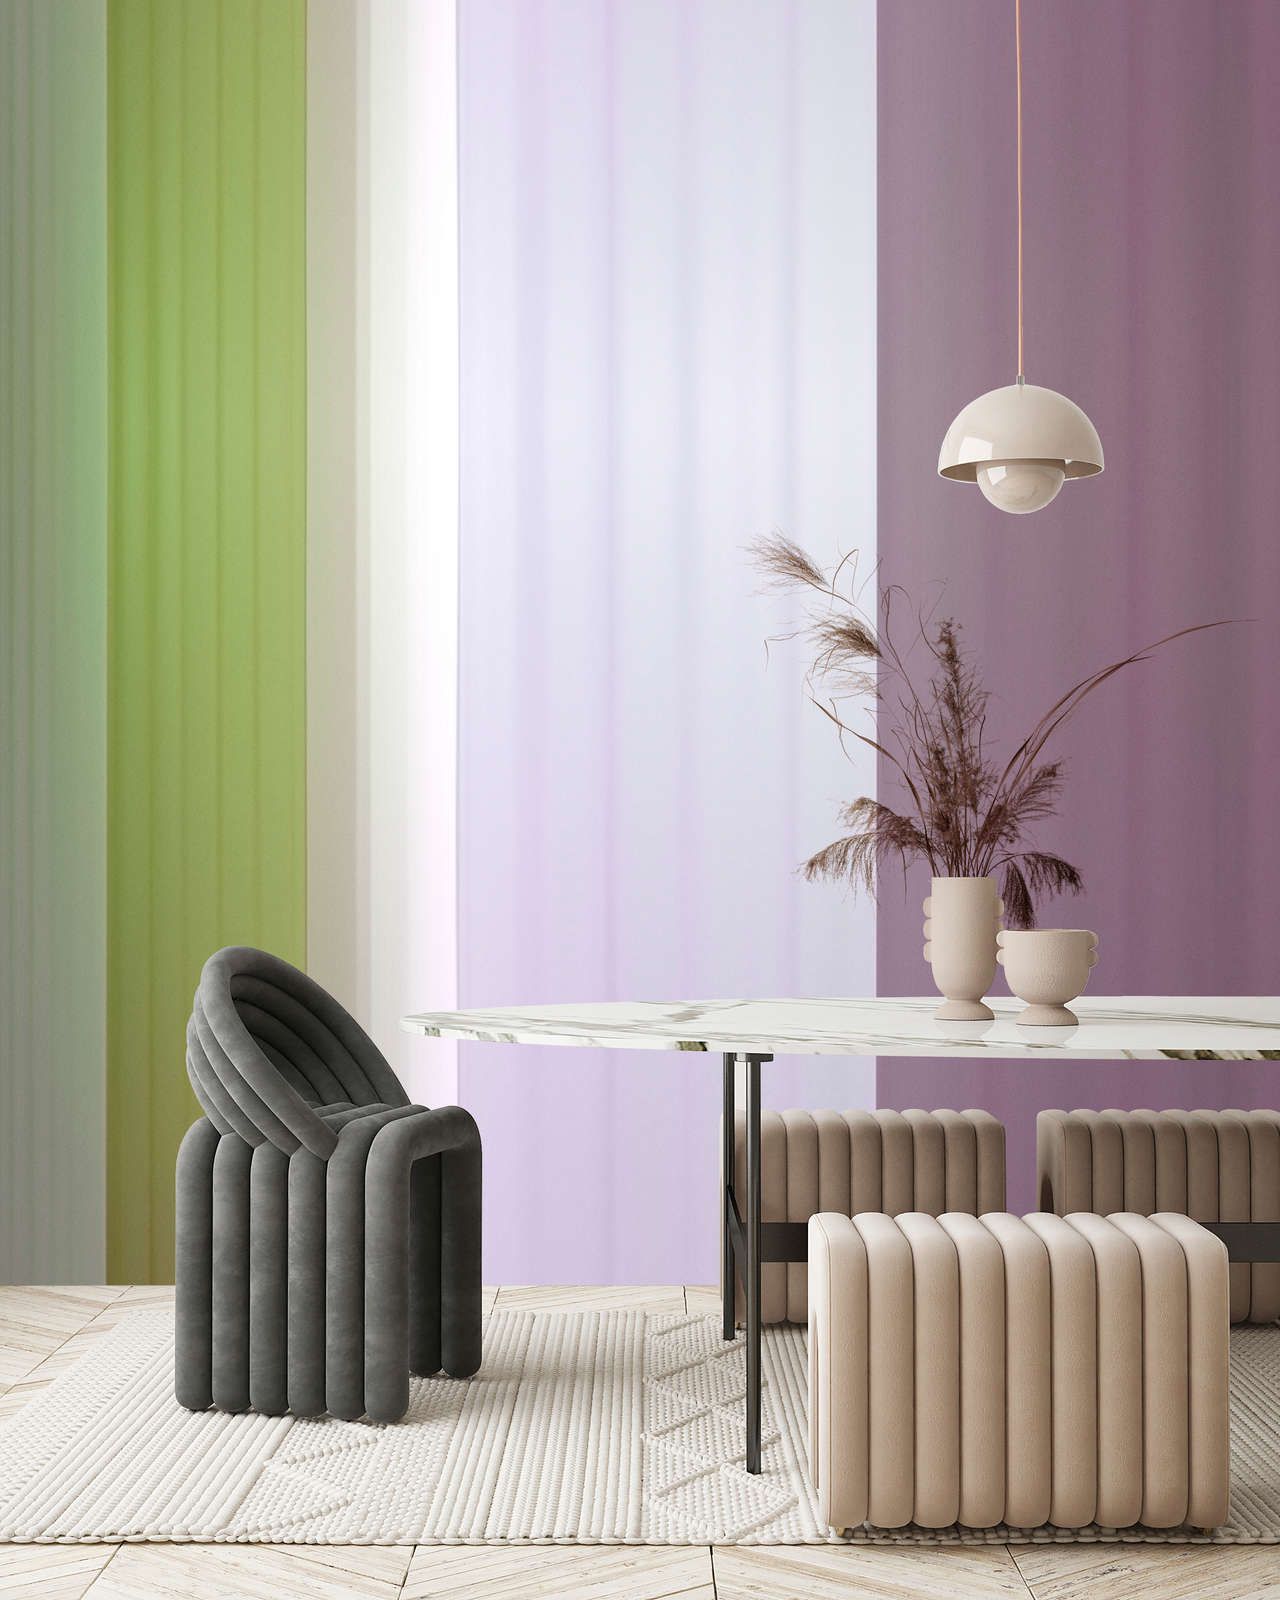             Fotomurali »co-colores 3« - colore sfumato a strisce - verde, lilla, viola | tessuto non tessuto opaco e liscio
        